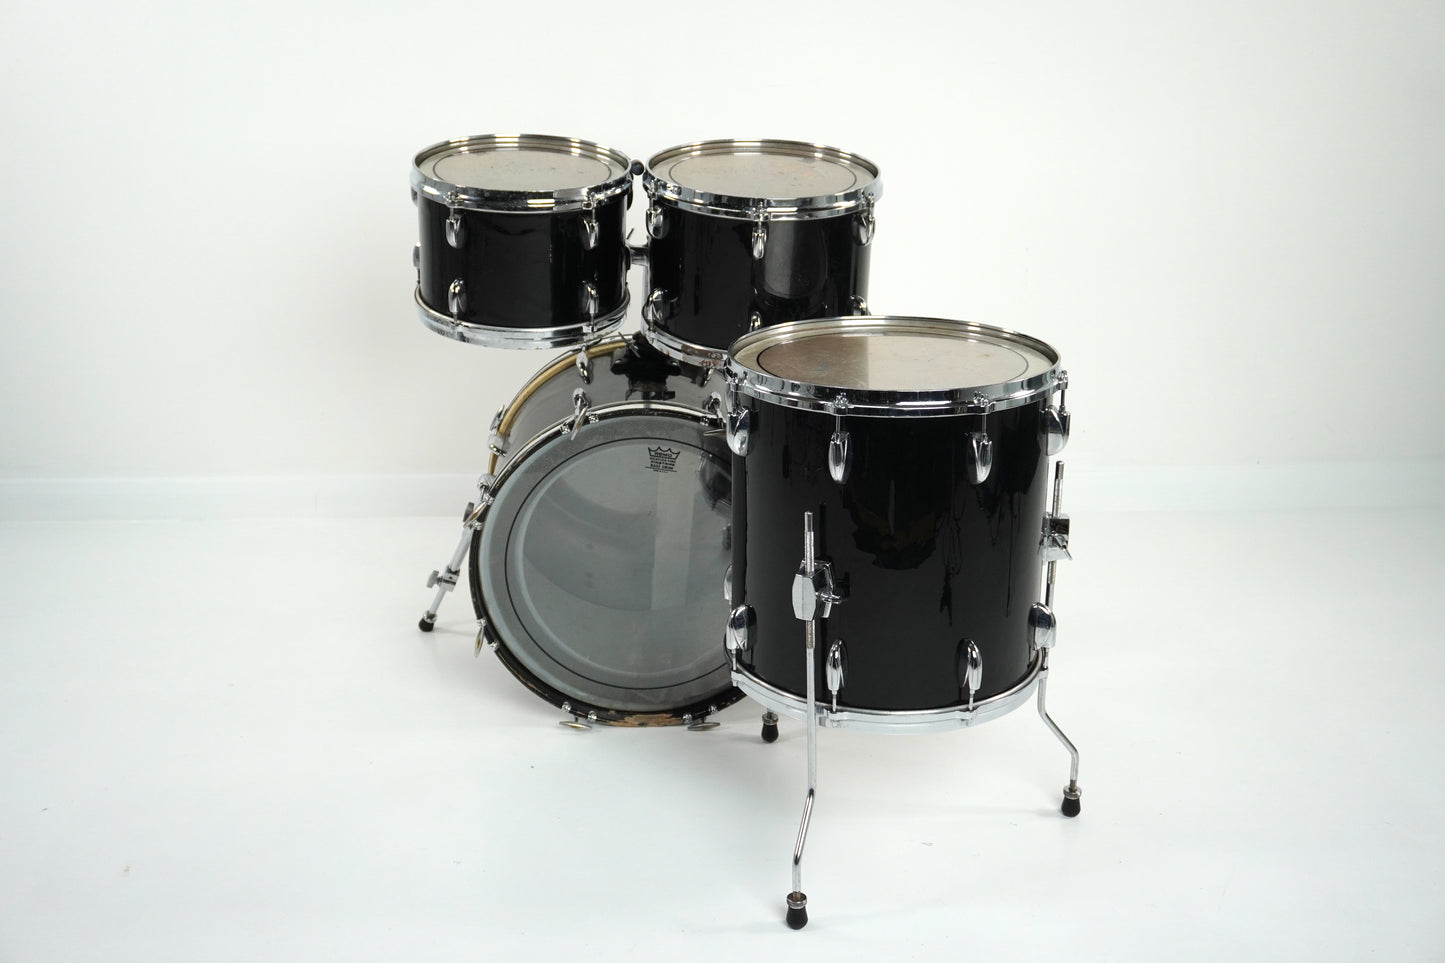 Gretsch USA 1969-1977 Drum kit 20x14 12x8 13x9 16x16